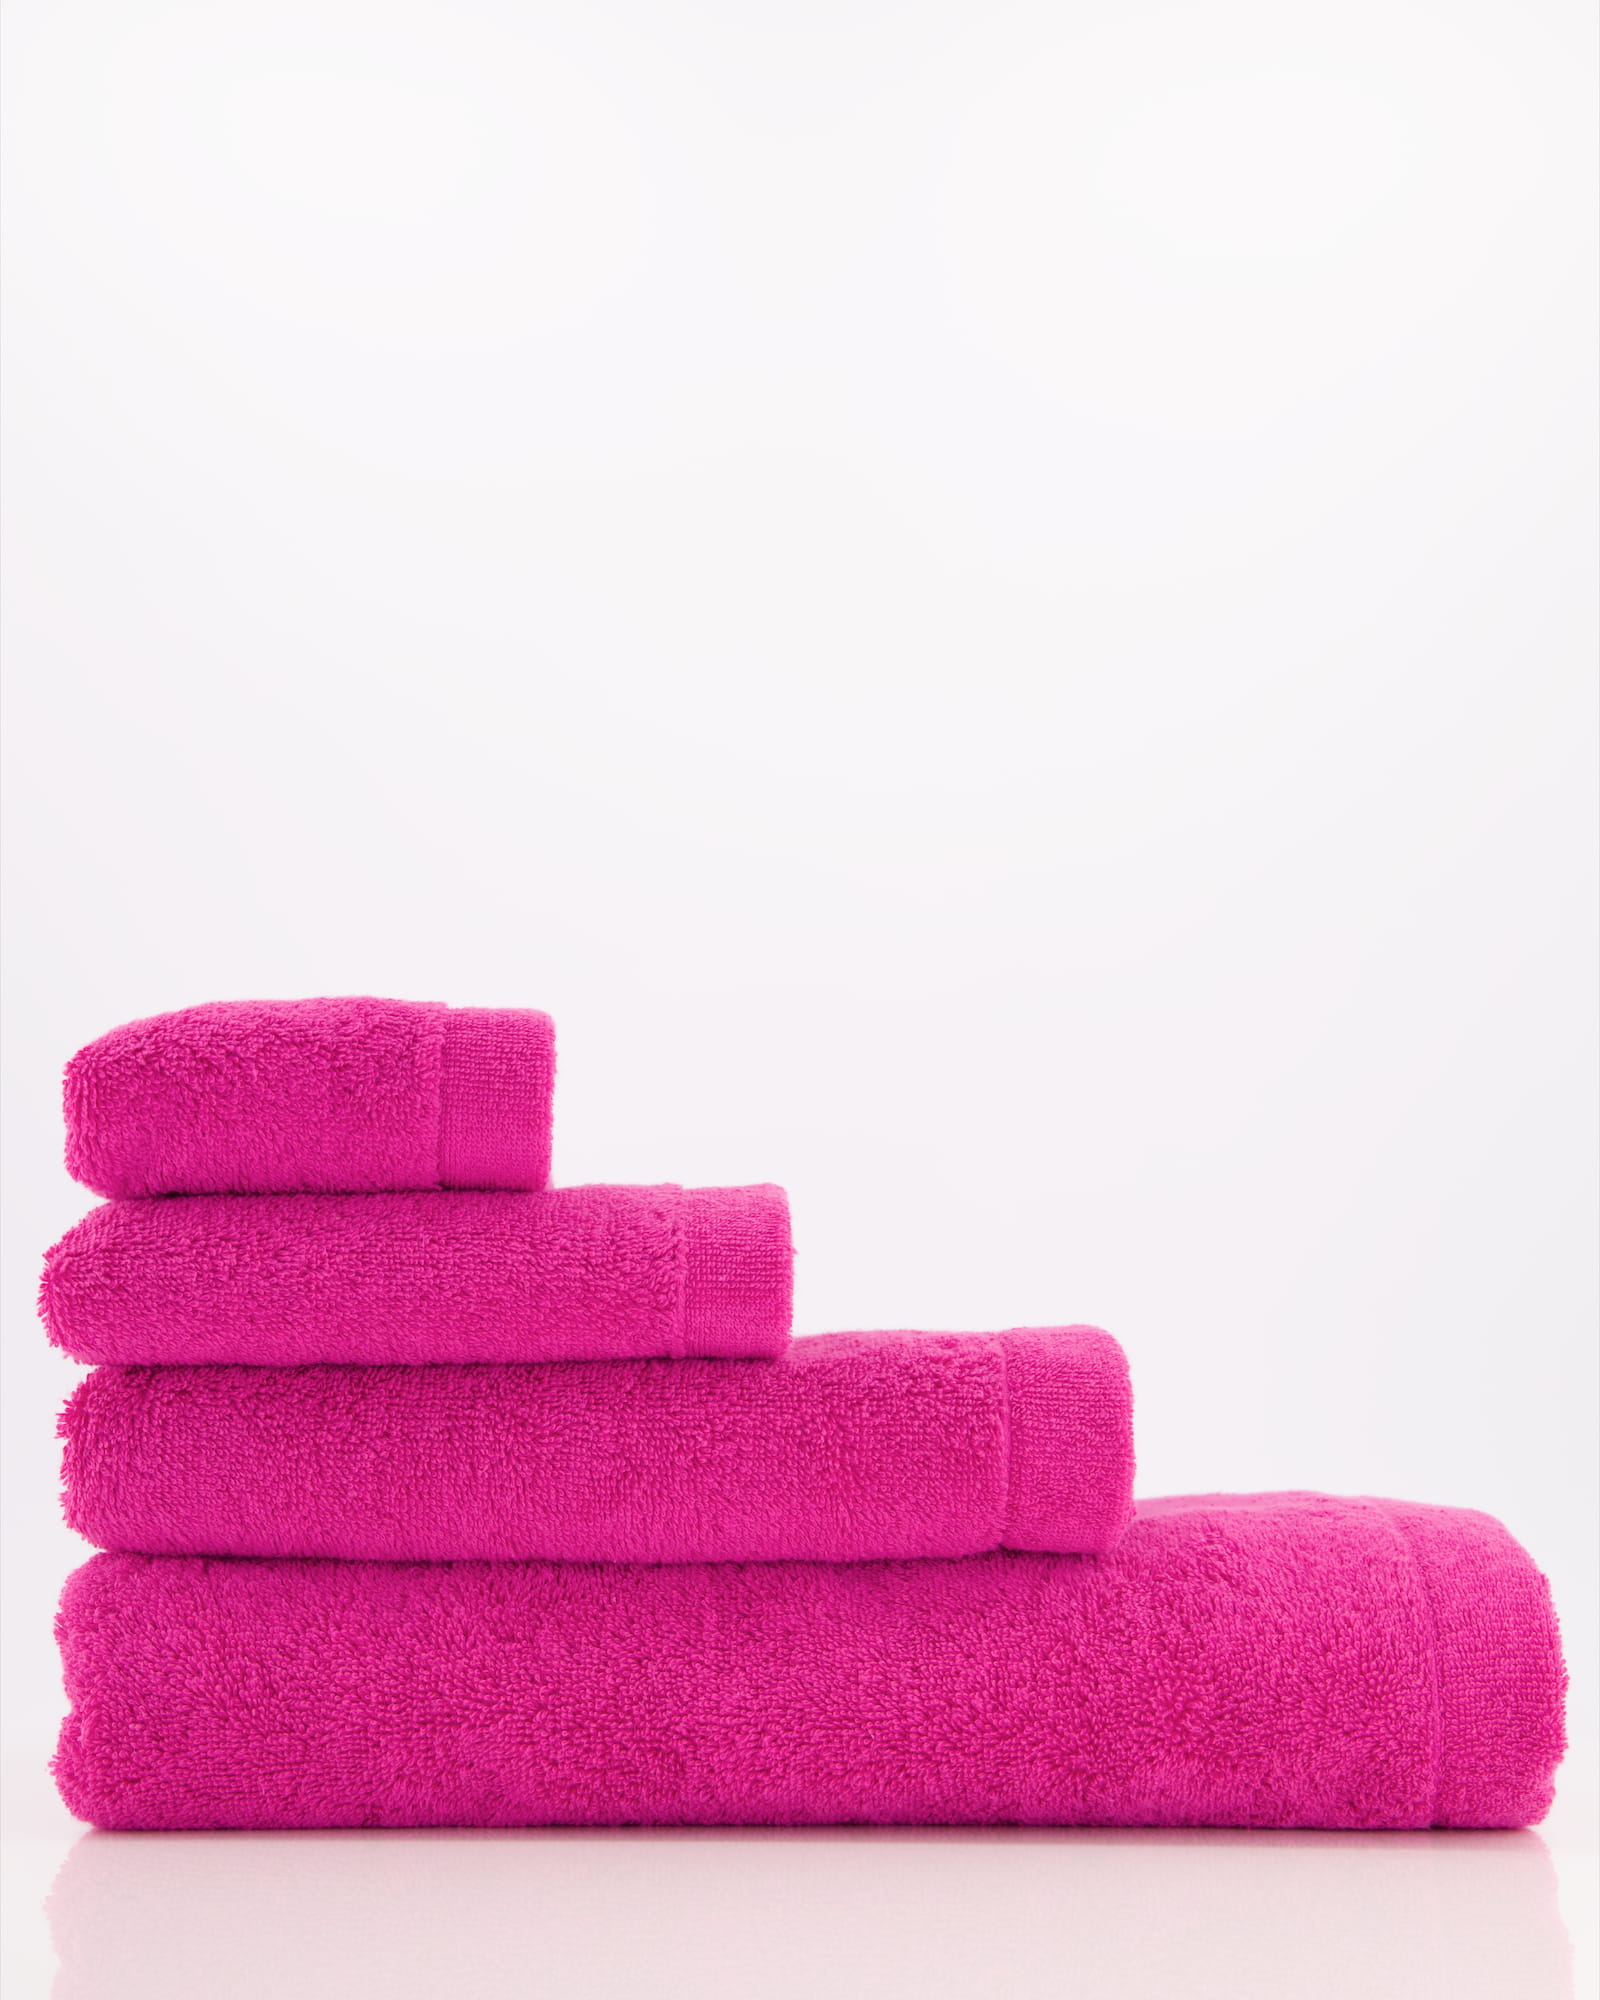 - Style Cawö 7007 | | Lifestyle | Life - Cawö - | Alle 247 Farbe: Serien Uni pink Handtücher